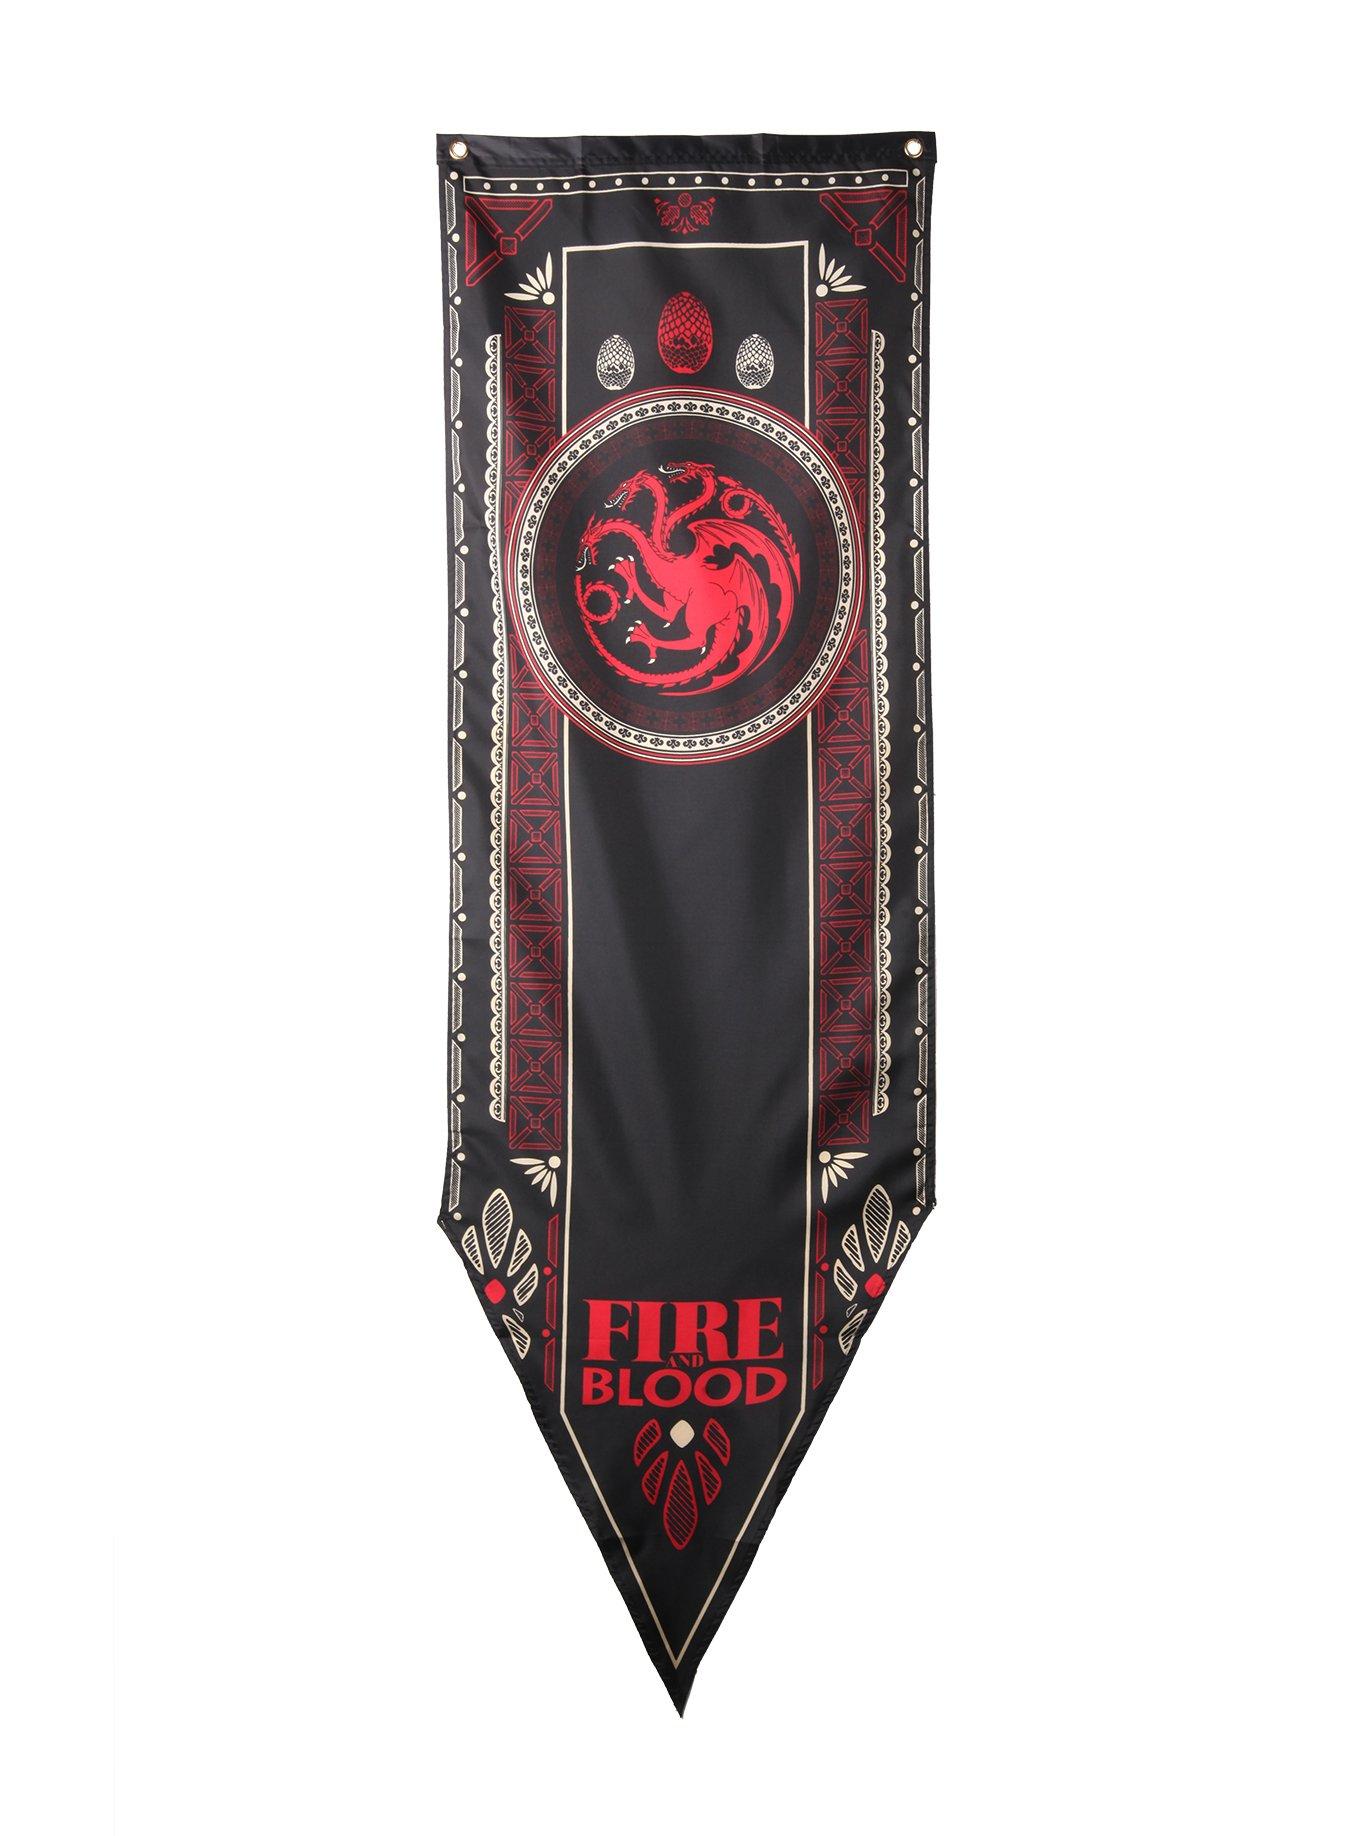 The Game Of Thrones Targaryen Tournament Banner | Hot Topic